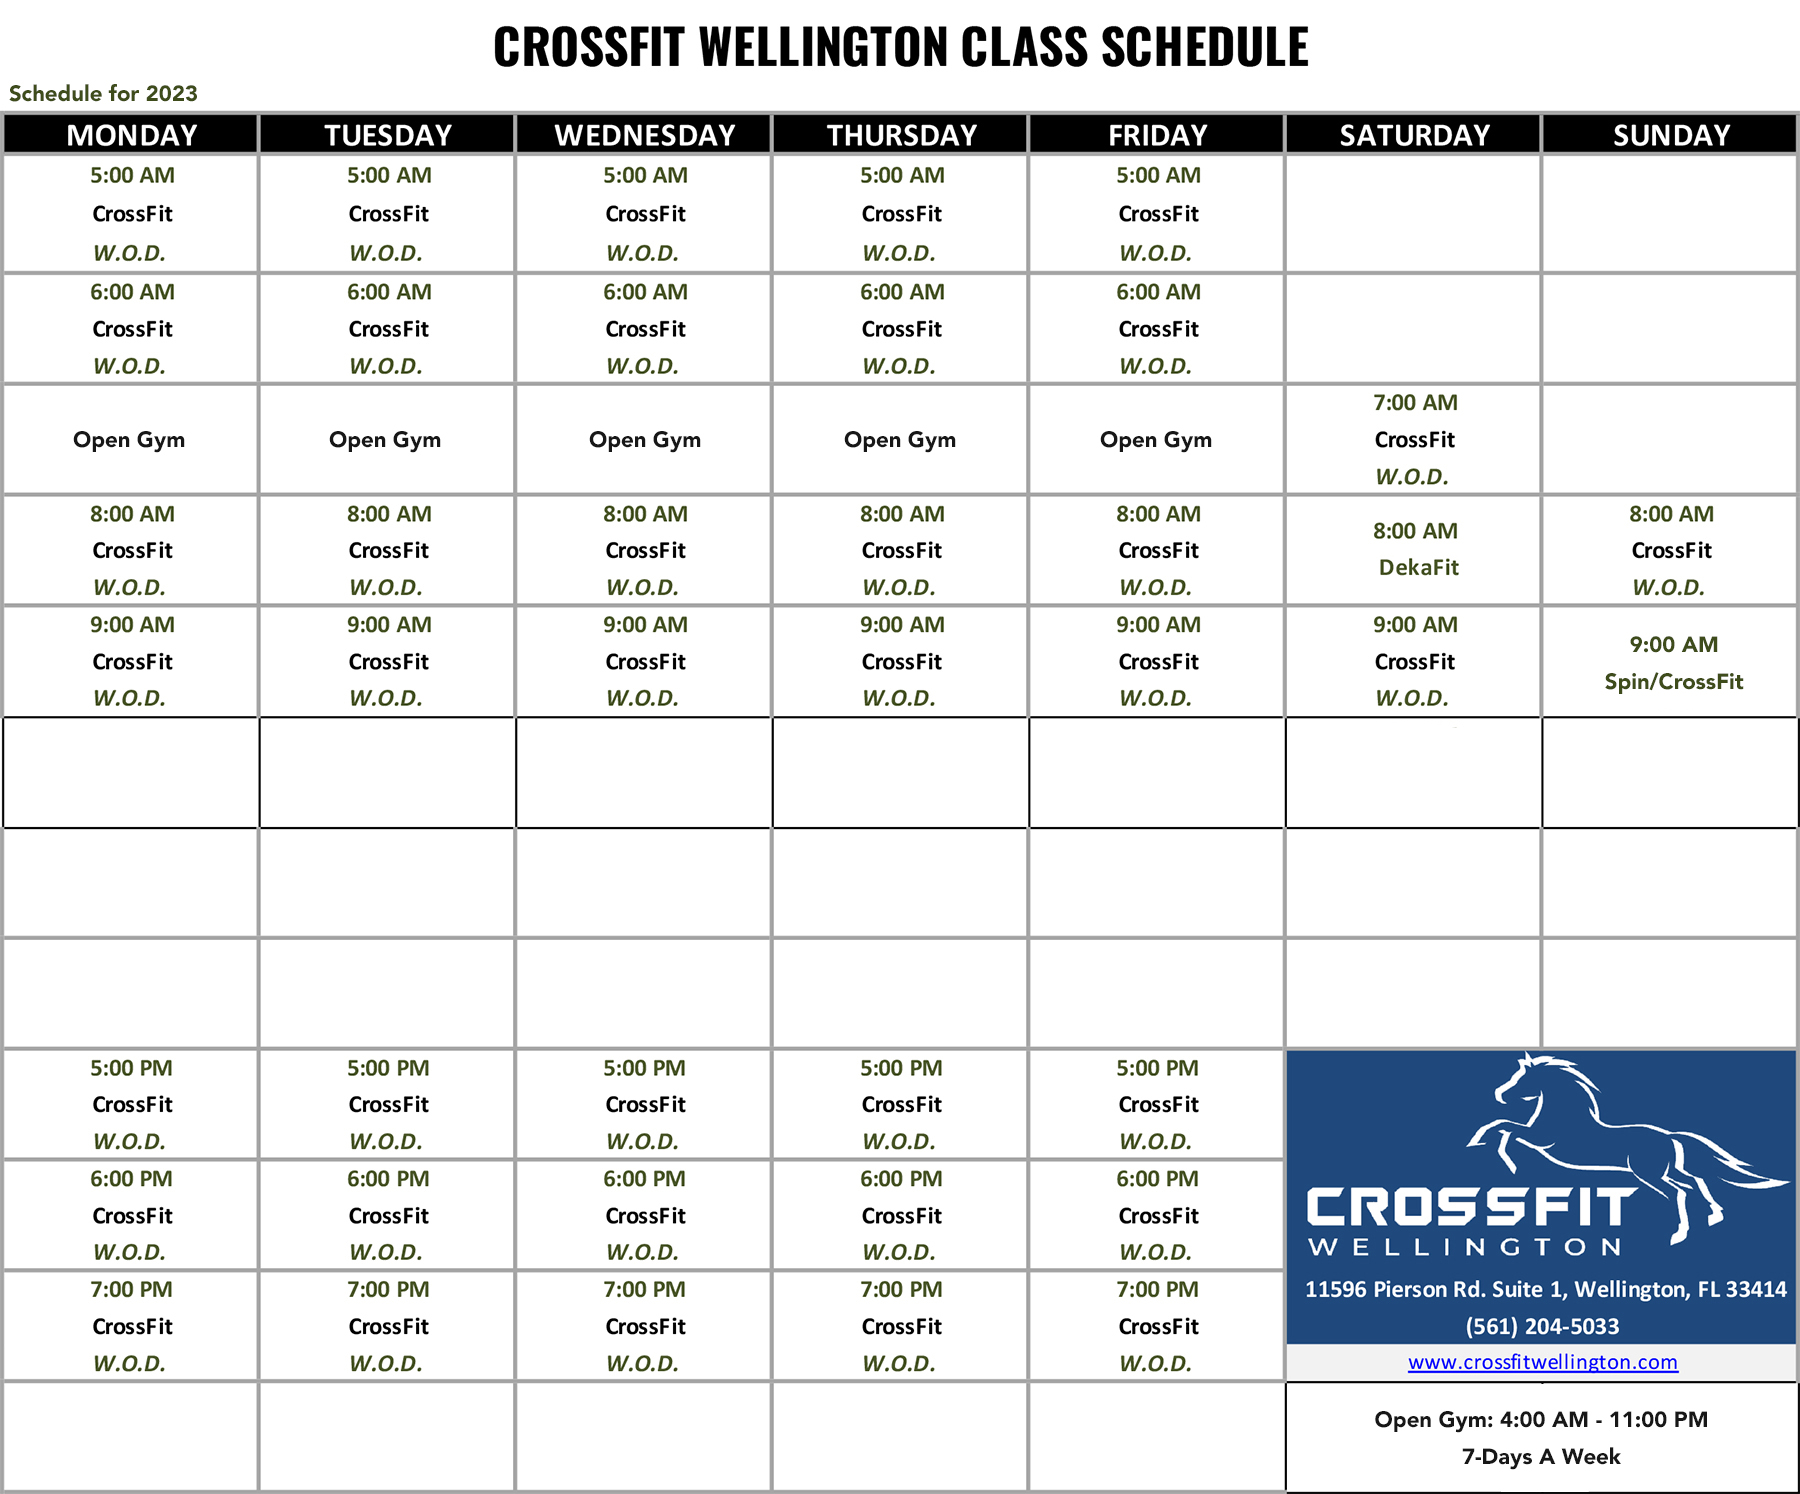 CrossFit Wellington 2023 Class Schedule